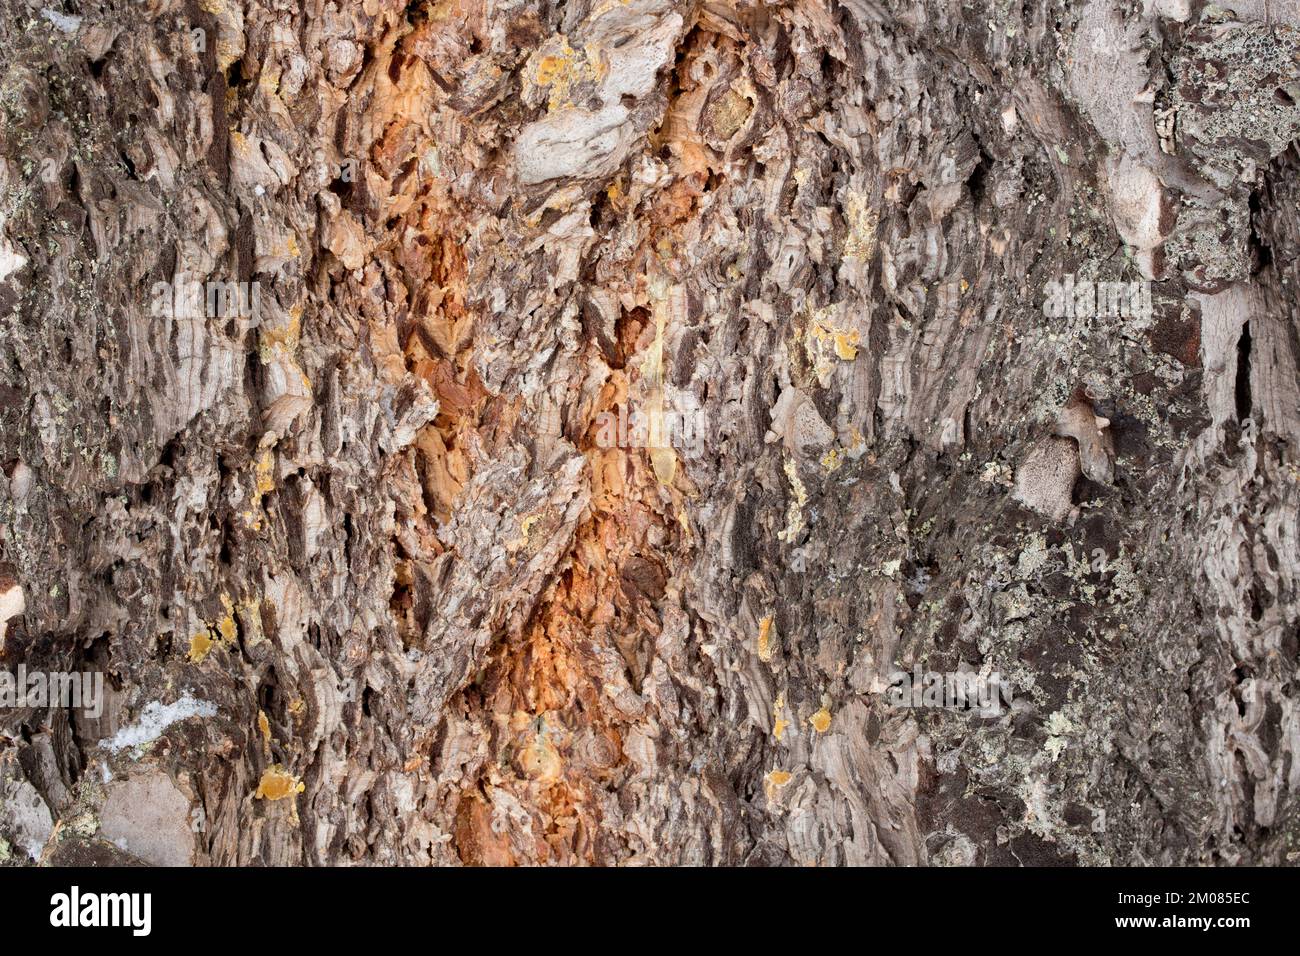 Rocky Mountain Douglas fir tree bark, Pseudotsuga menziesii var. glauca, Troy, Montana. Stock Photo